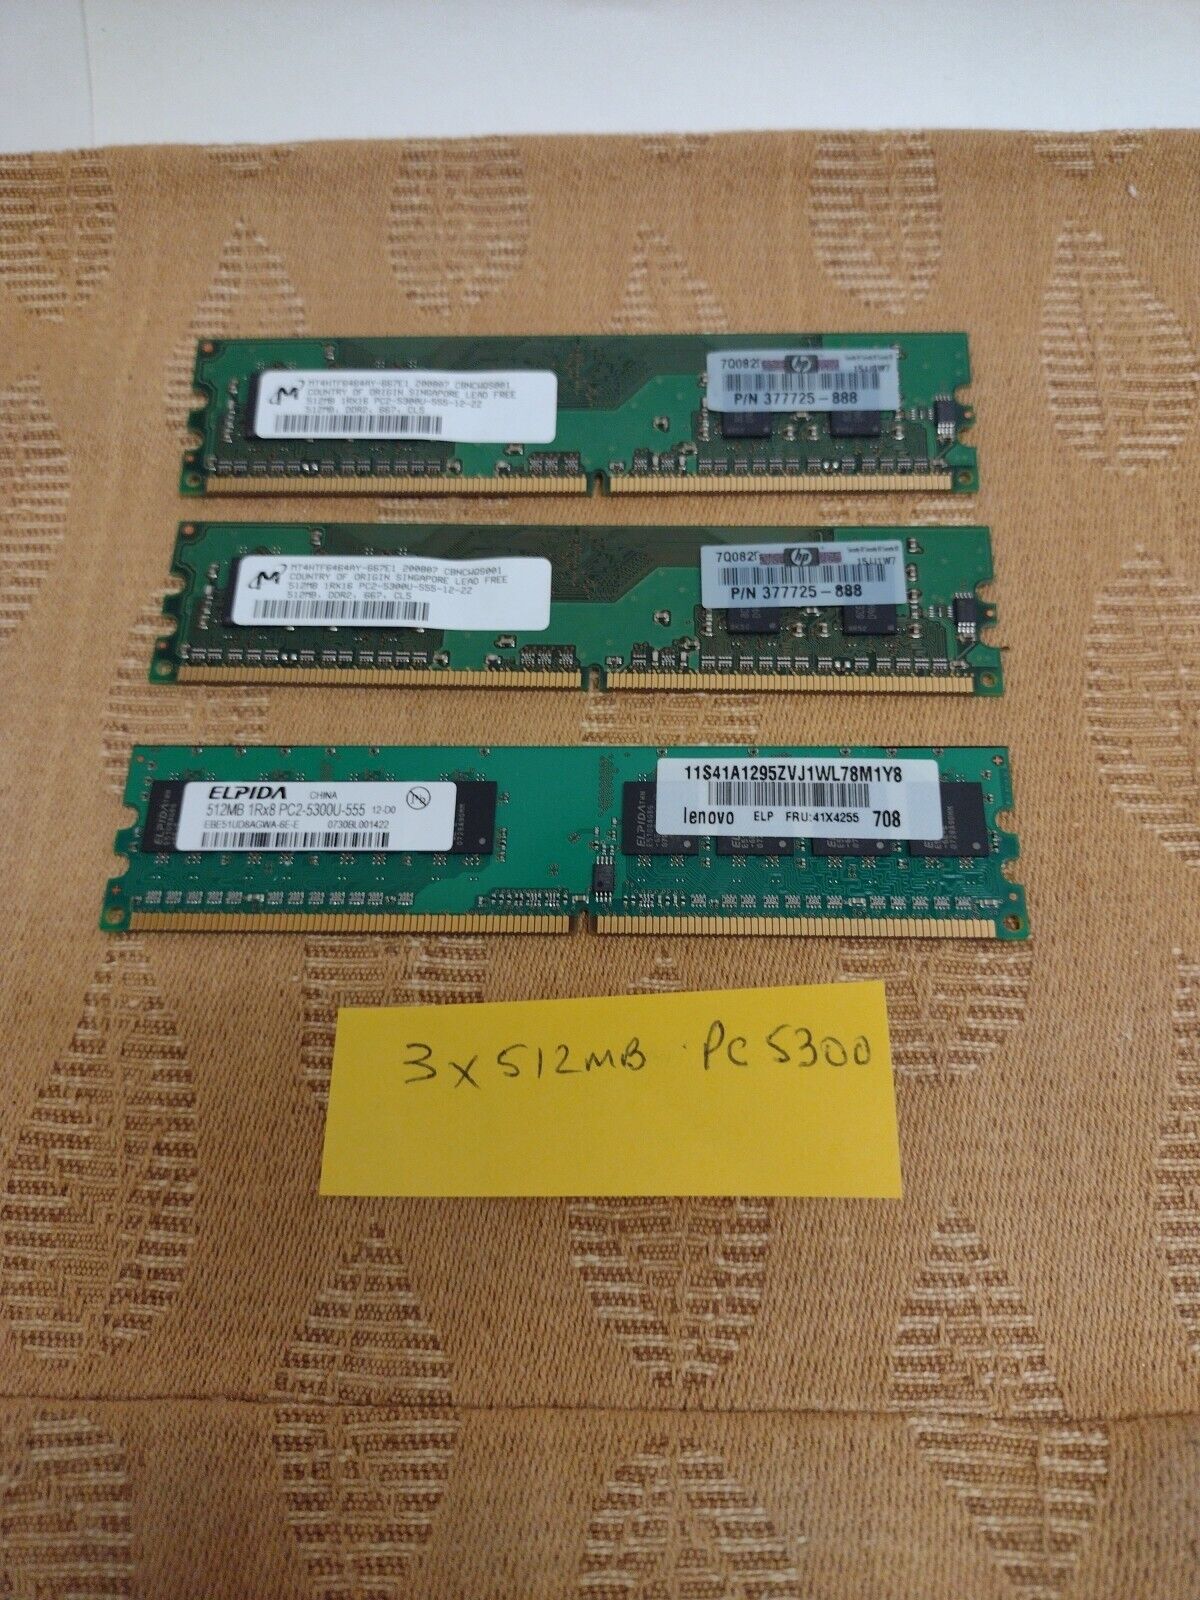 RAM 512MB PC5300 X 3